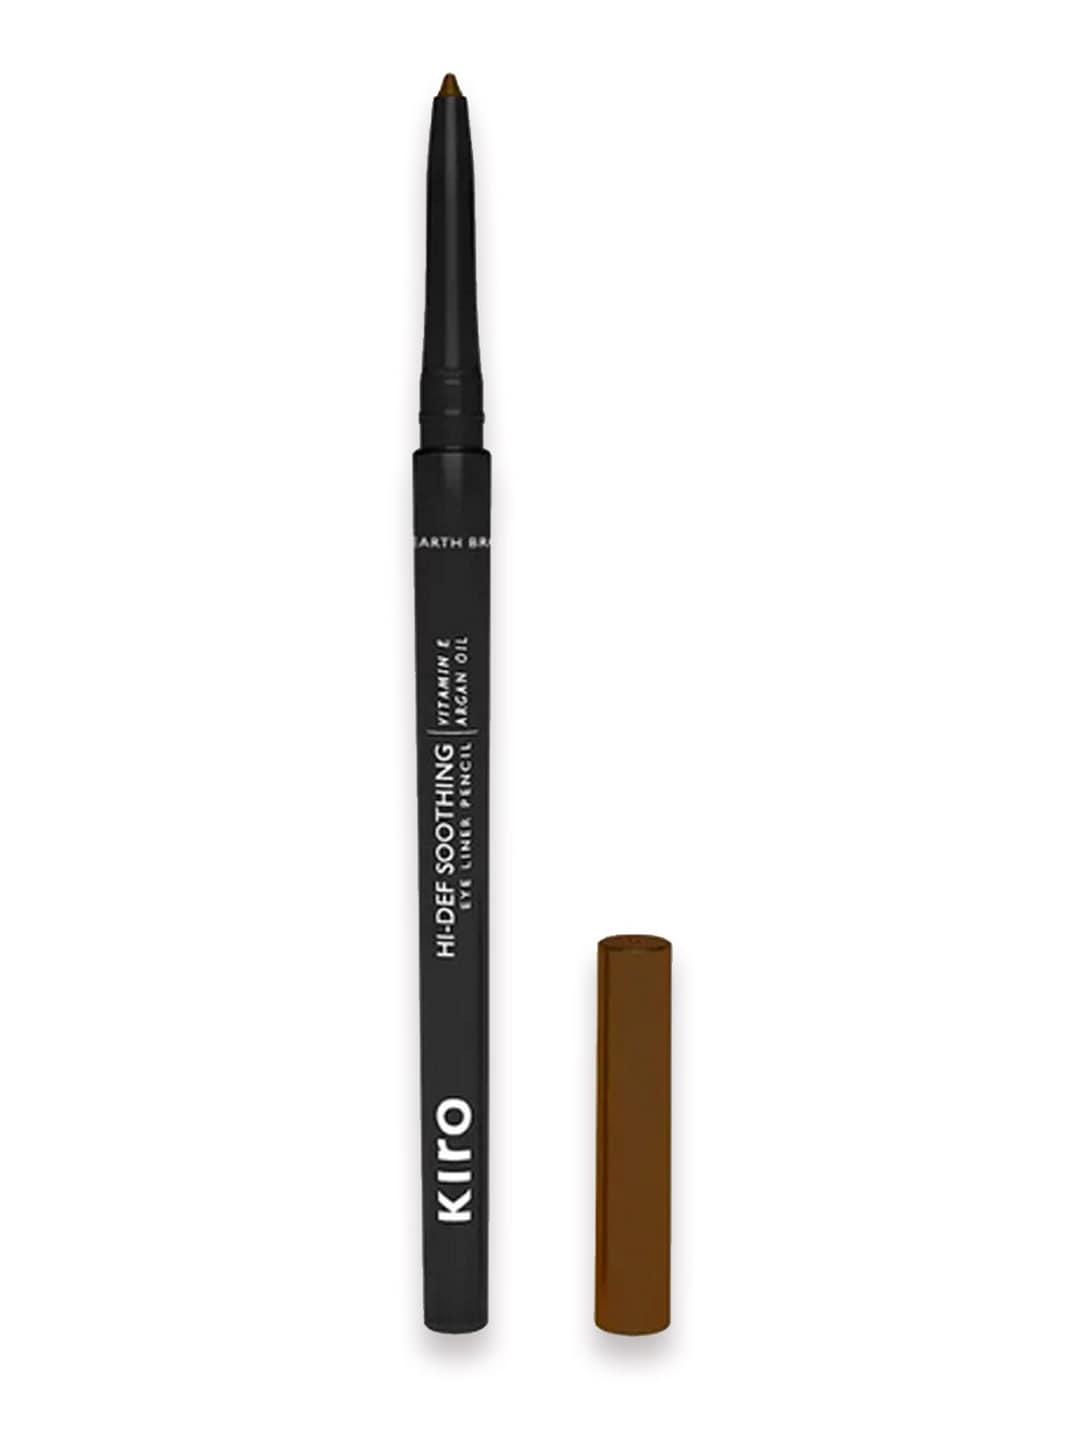 KIRO Hi-Def Soothing Eyeliner Pencil with Vitamin E & Argan Oil - Earth Brown